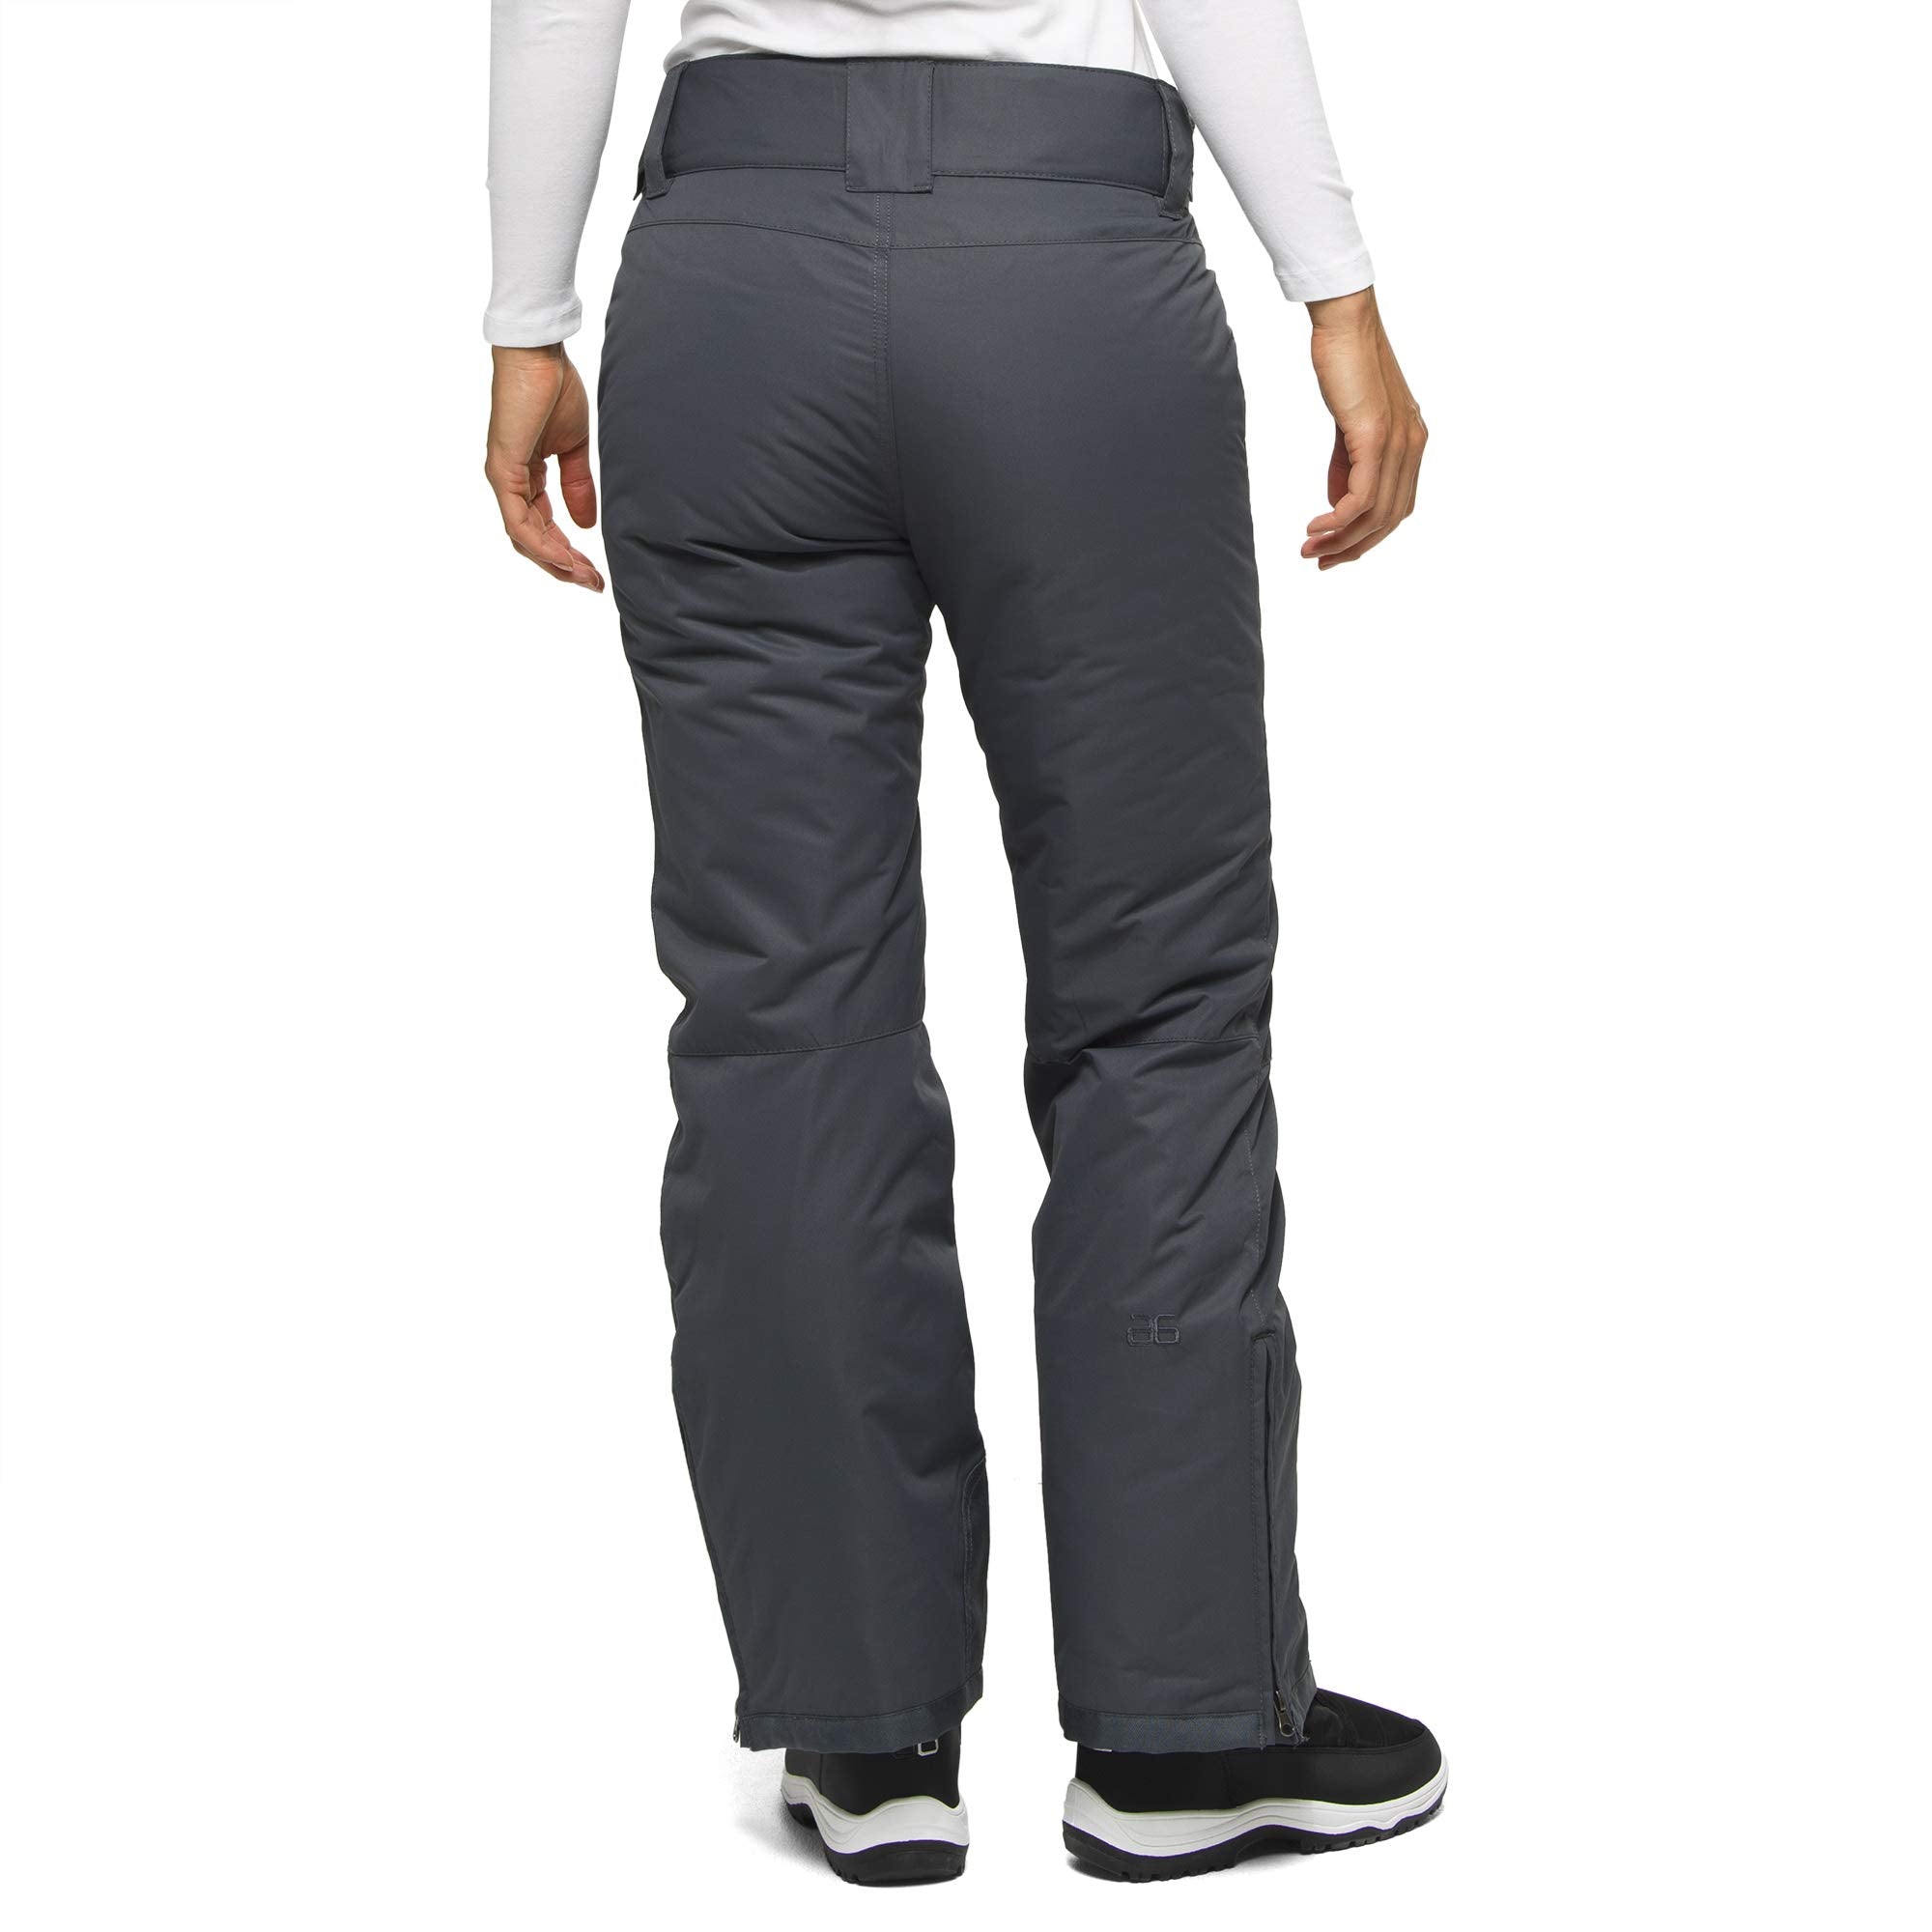 Arctix Women's Snow Sports Insulated Cargo Pants, Steel, 3X Short